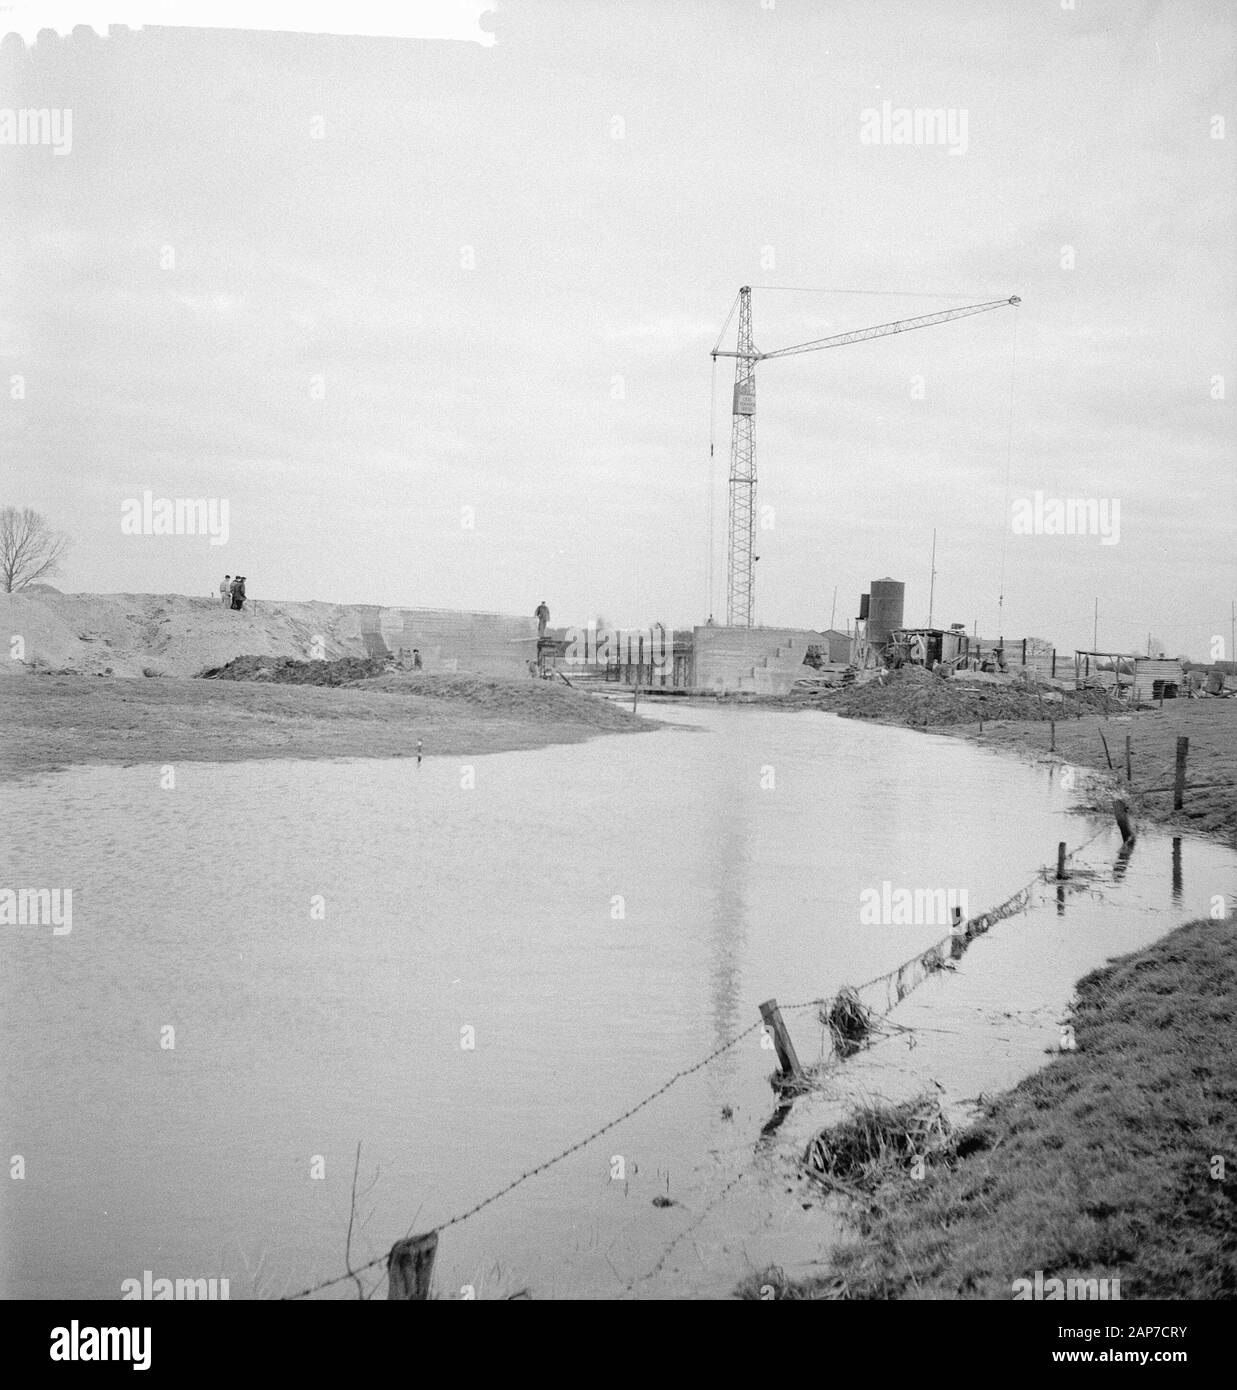 Construction of motorway E35 [A12] beyond Arnhem, work on the bridge over the [IJssel] Date: February 8, 1961 Location: Arnhem Keywords: motorways, bridges, rivers, traffic, road construction Stock Photo